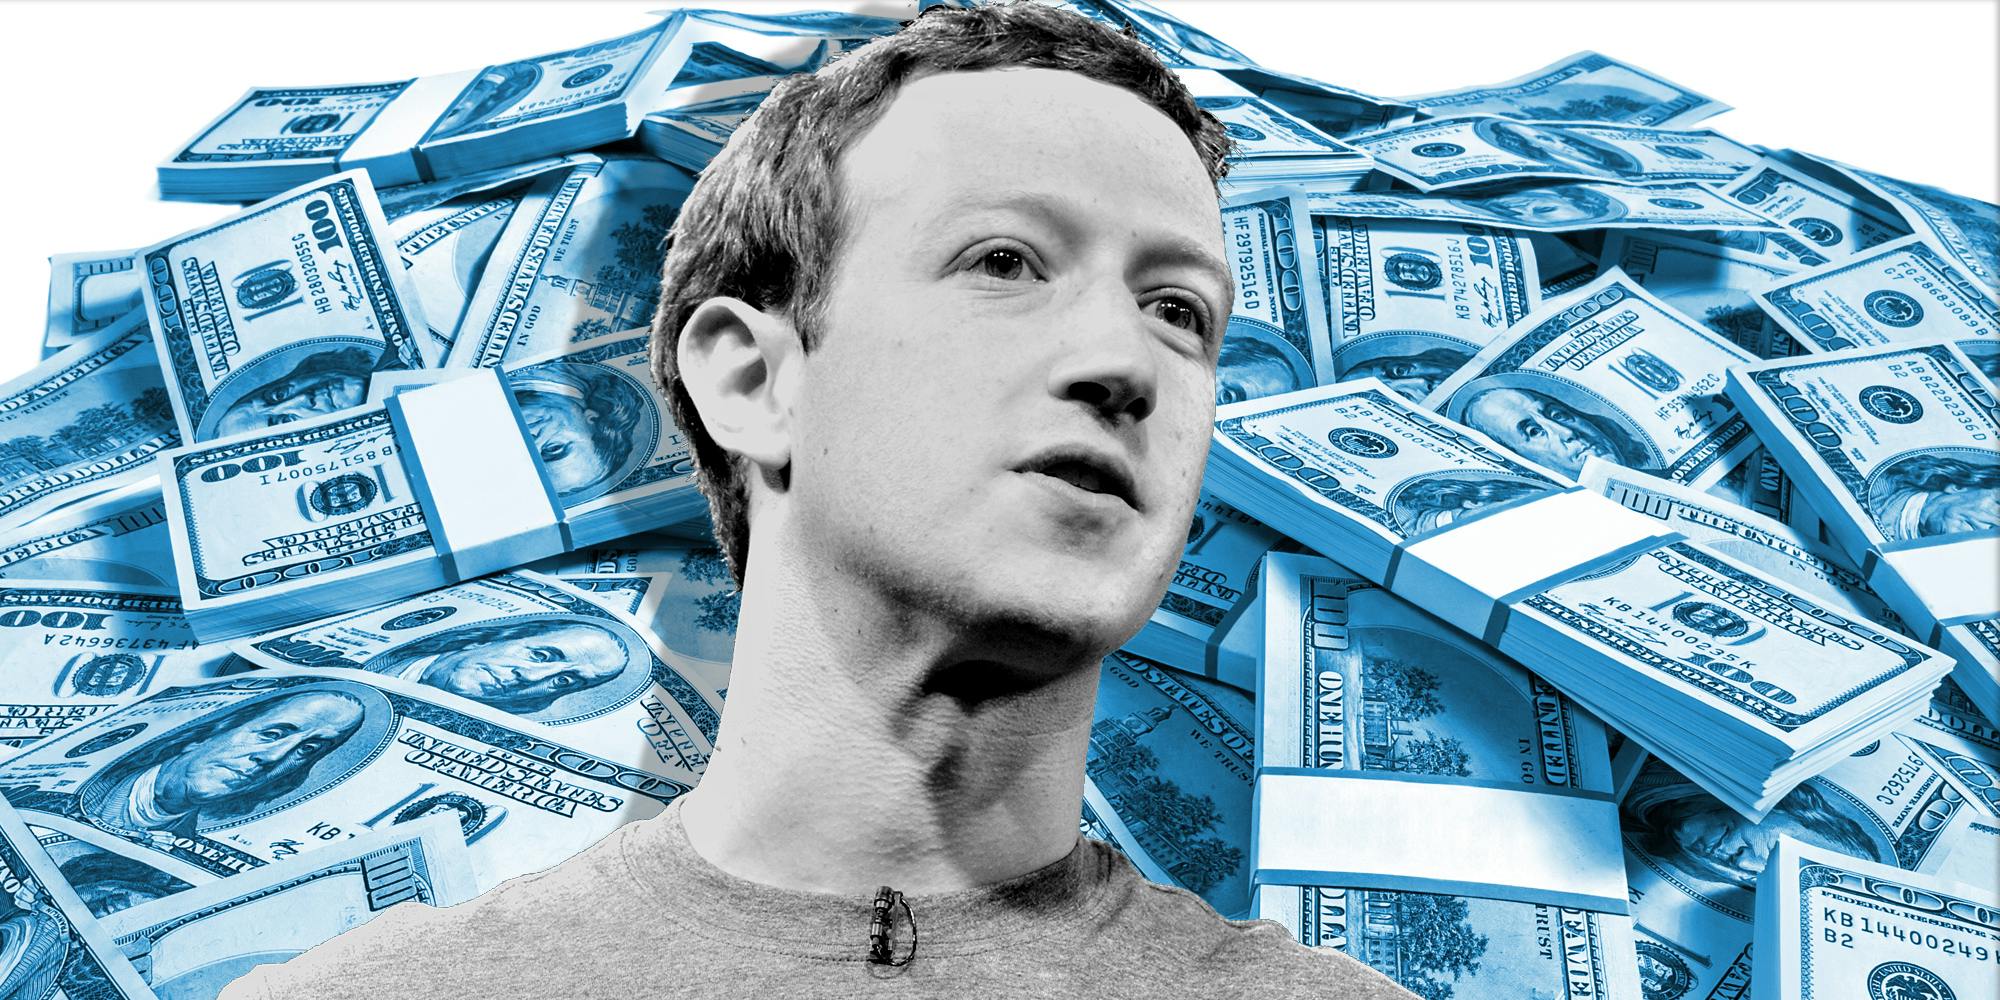 mark zuckerberg over piles of $100 billsas part of facebook lawsuit settlement claim